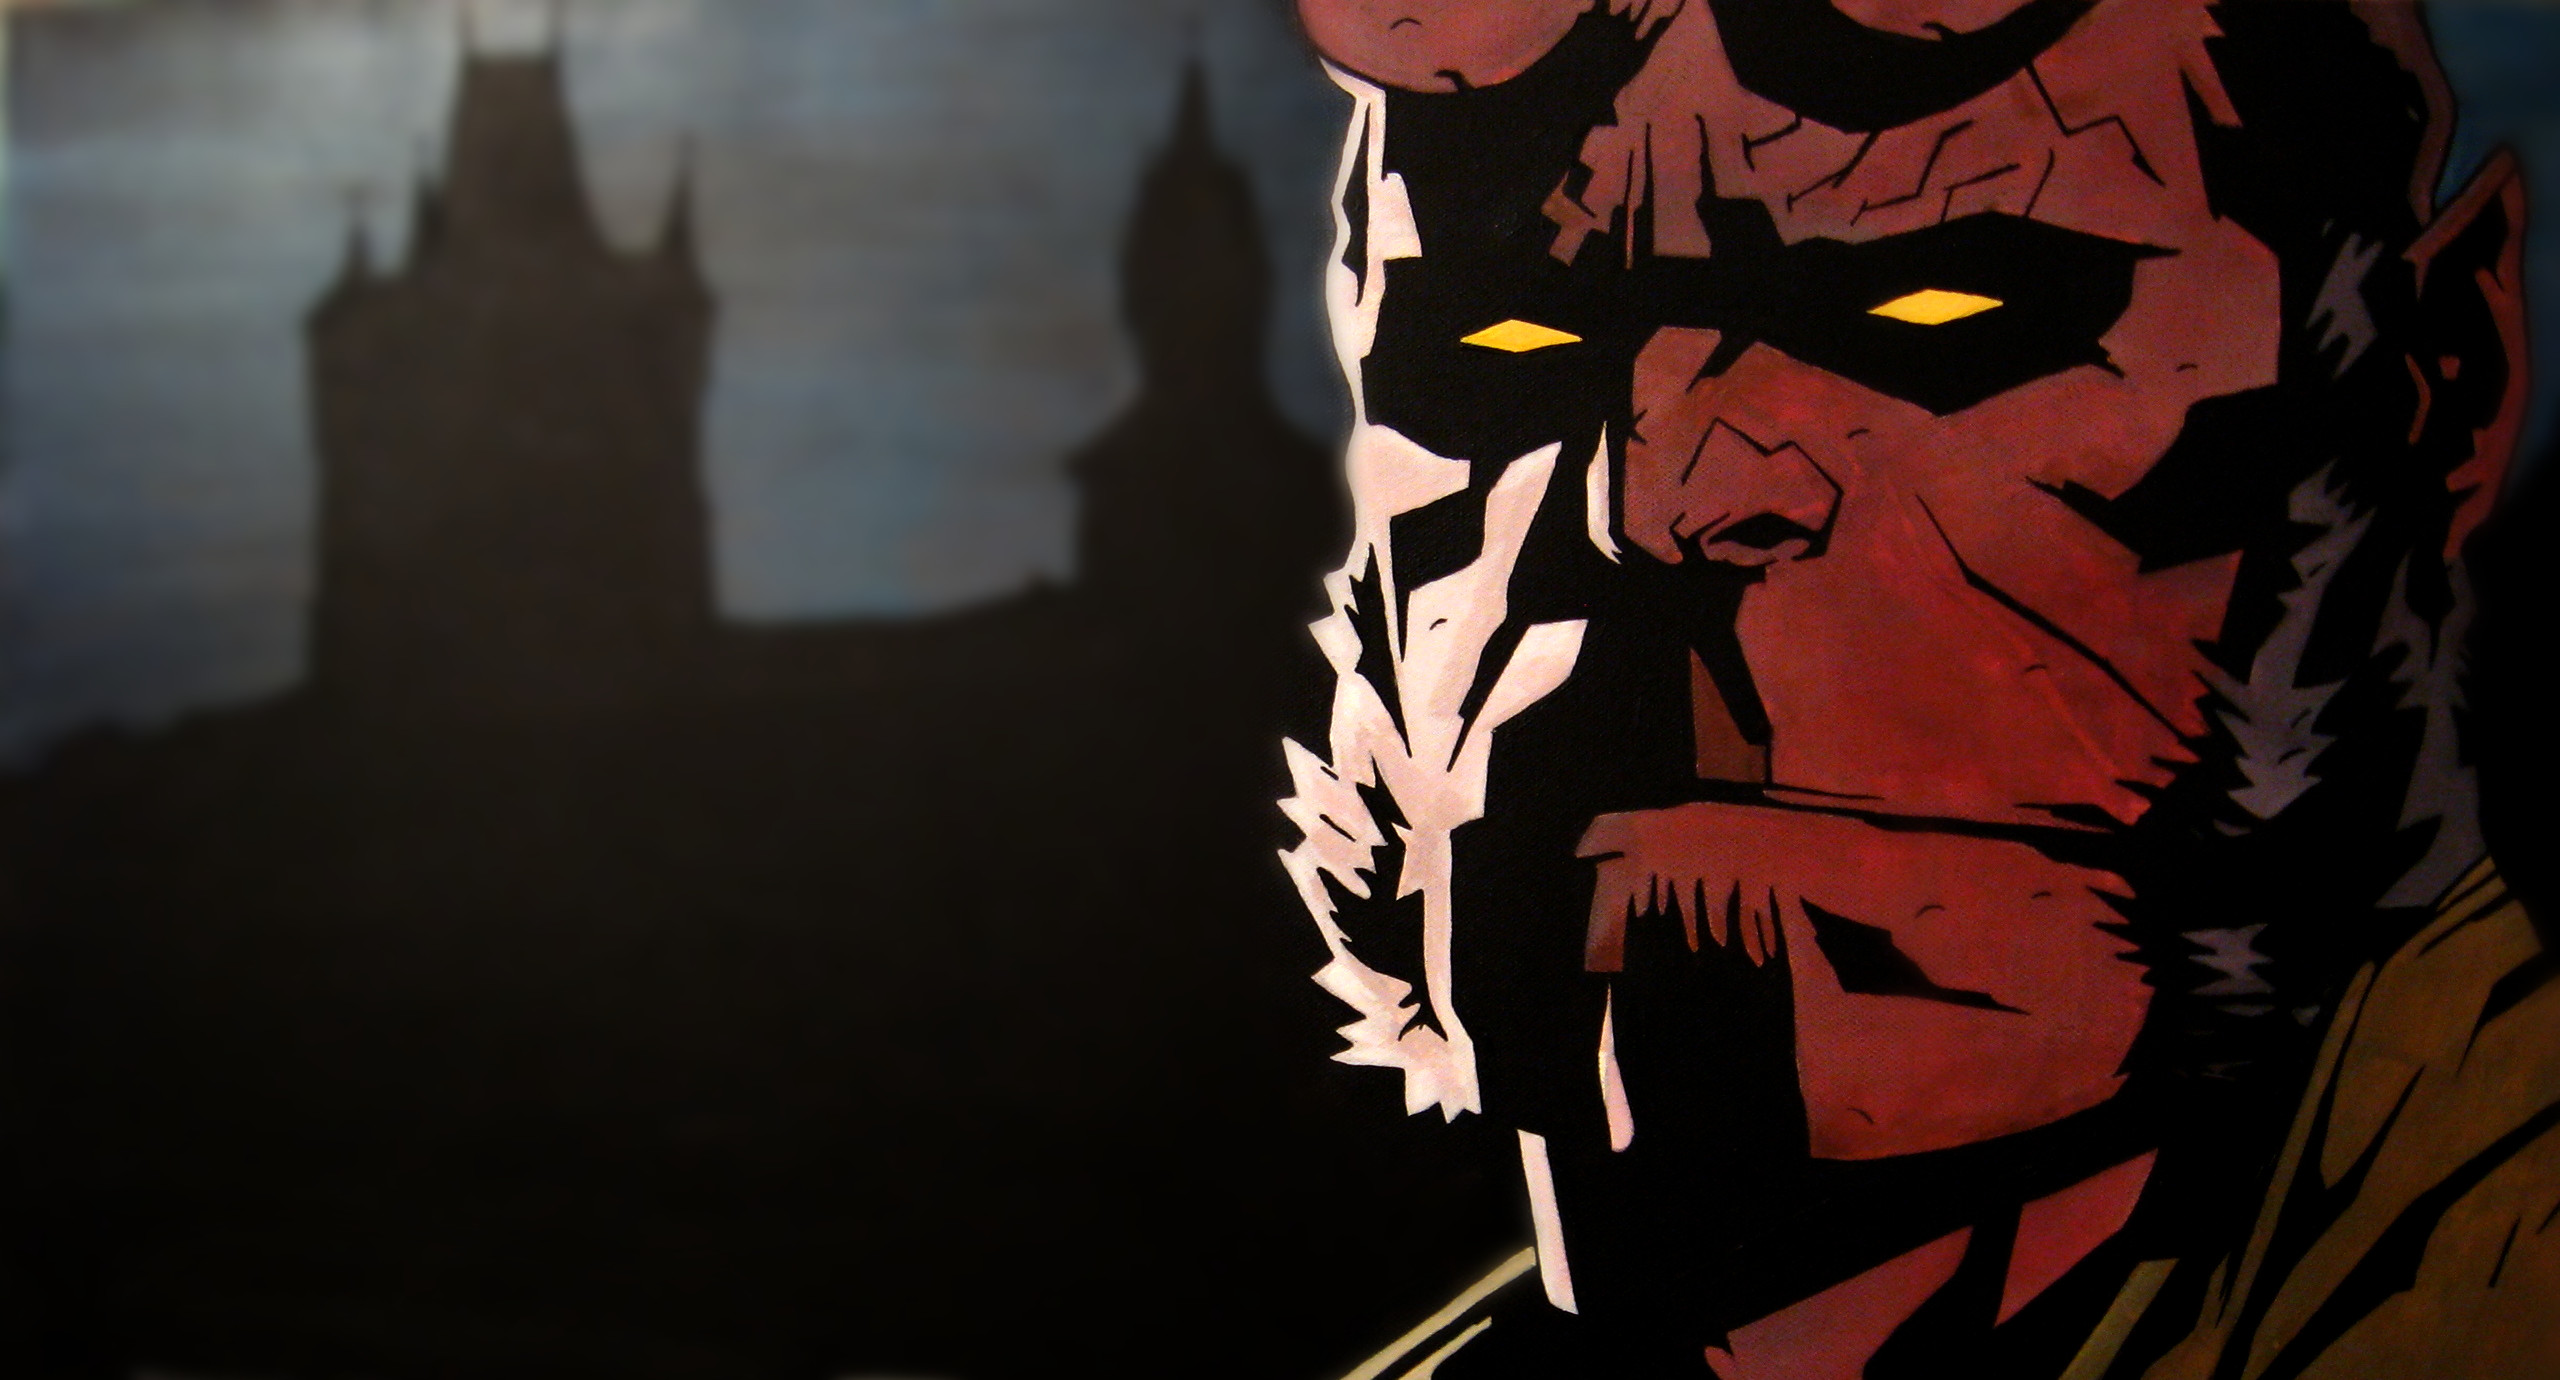 Ian McShane rejoint le casting d'Hellboy